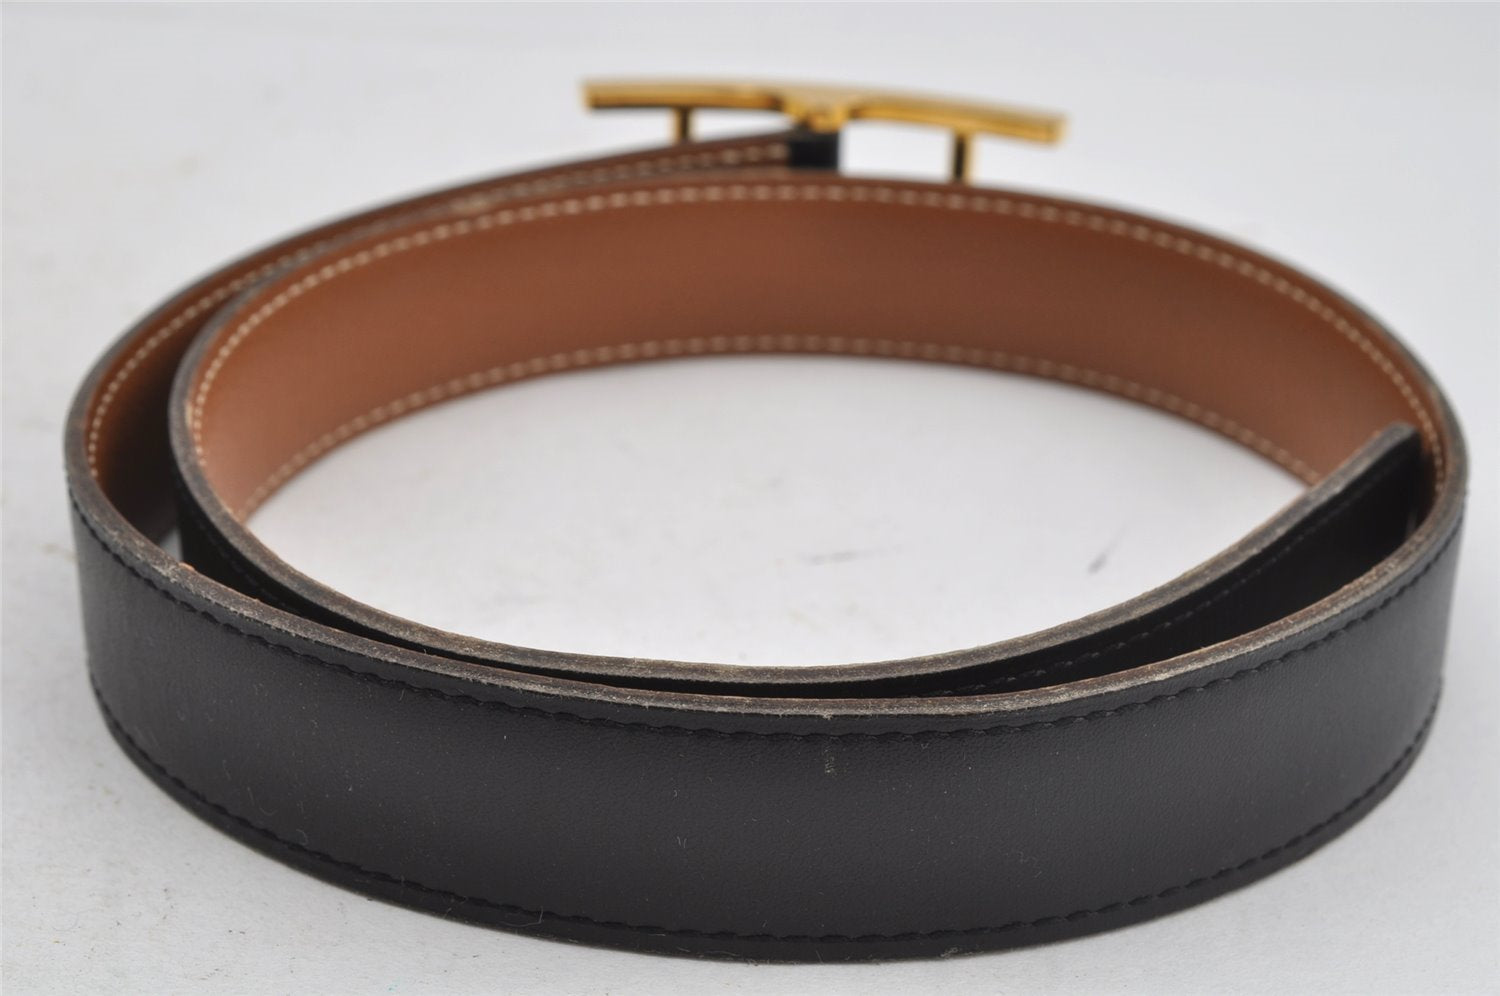 Authentic HERMES Api 3 Leather Reversible Belt Size 65cm 25.6